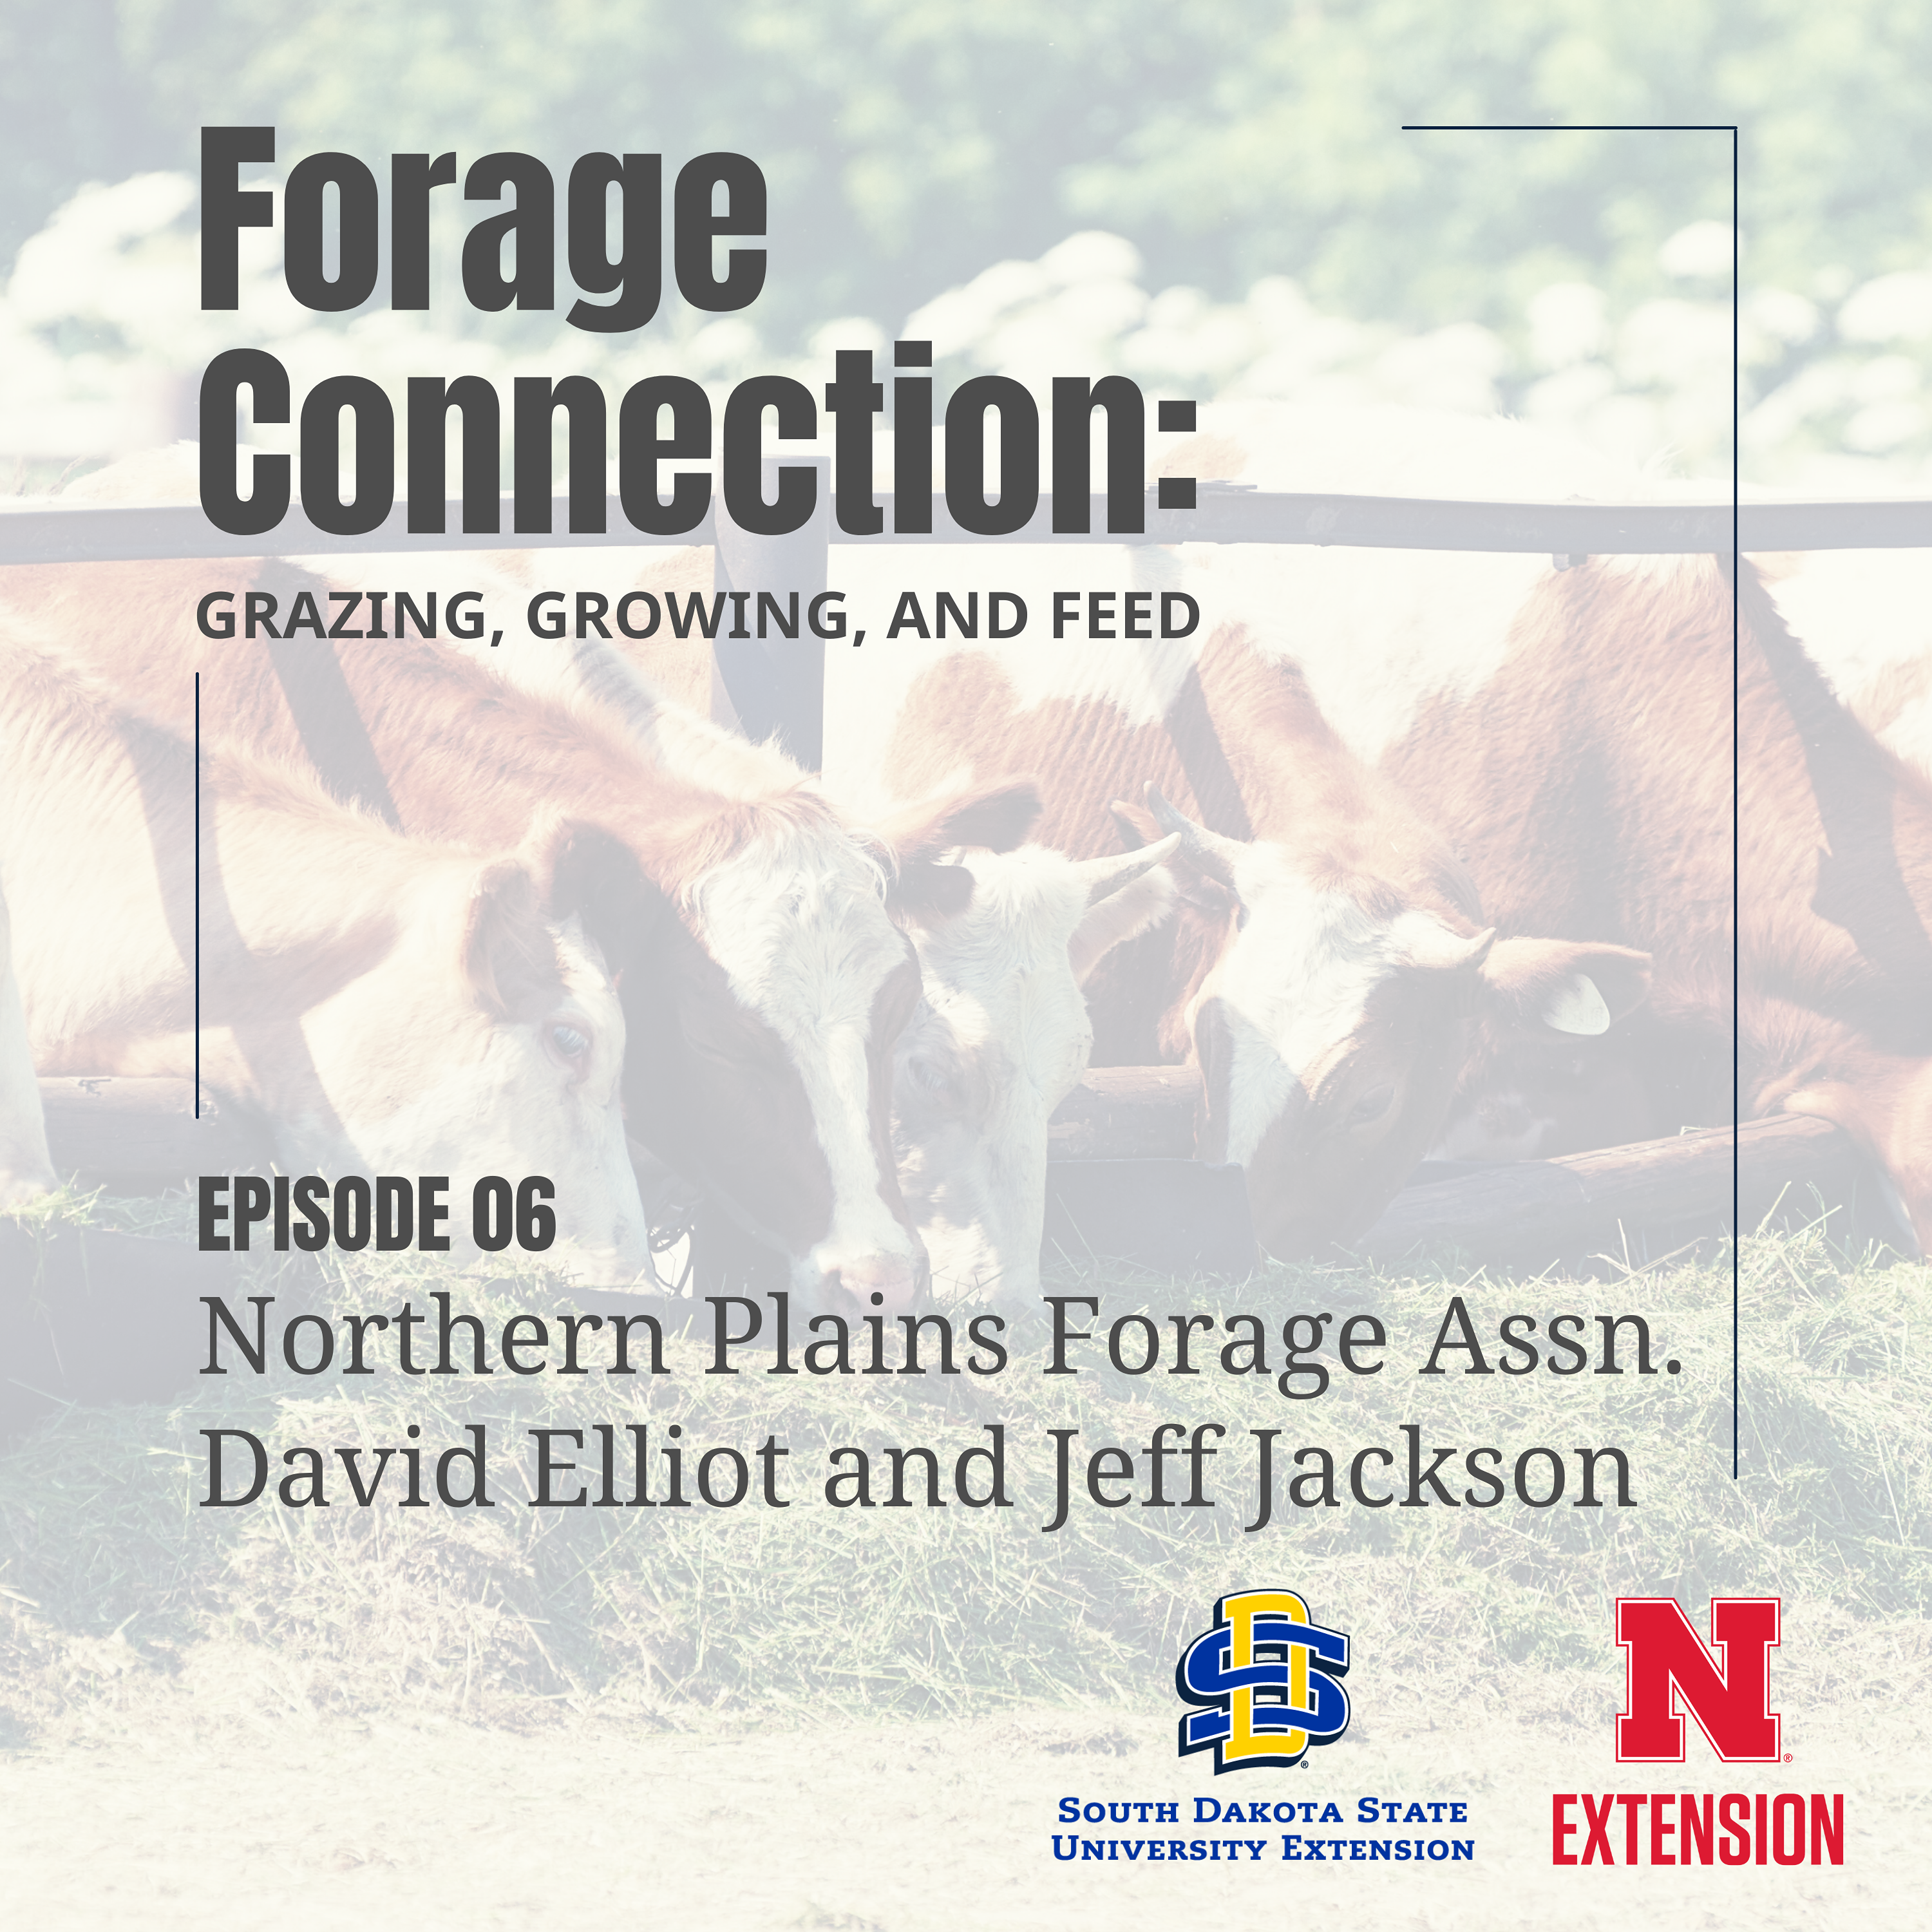 Northern Plains Forage Assn: David Elliot and Jeff Jackson